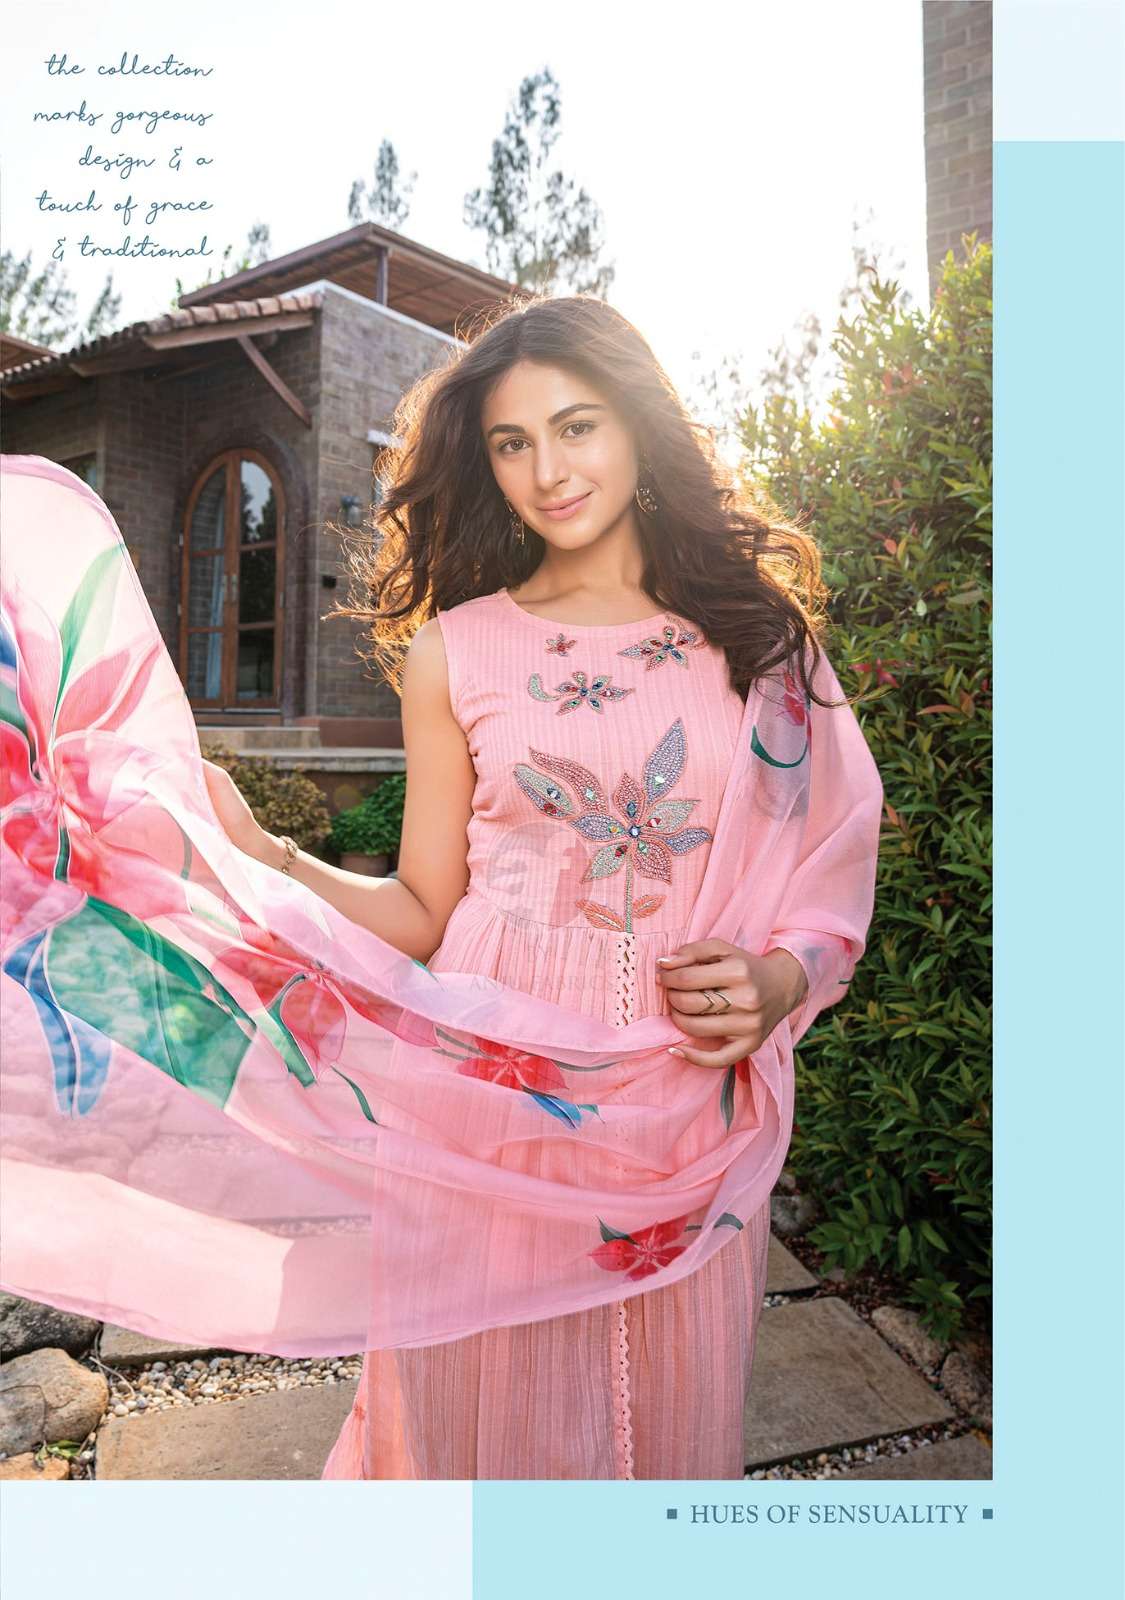 Anju Fabrics Patterns vol -2 Kurti Wholesale catalog